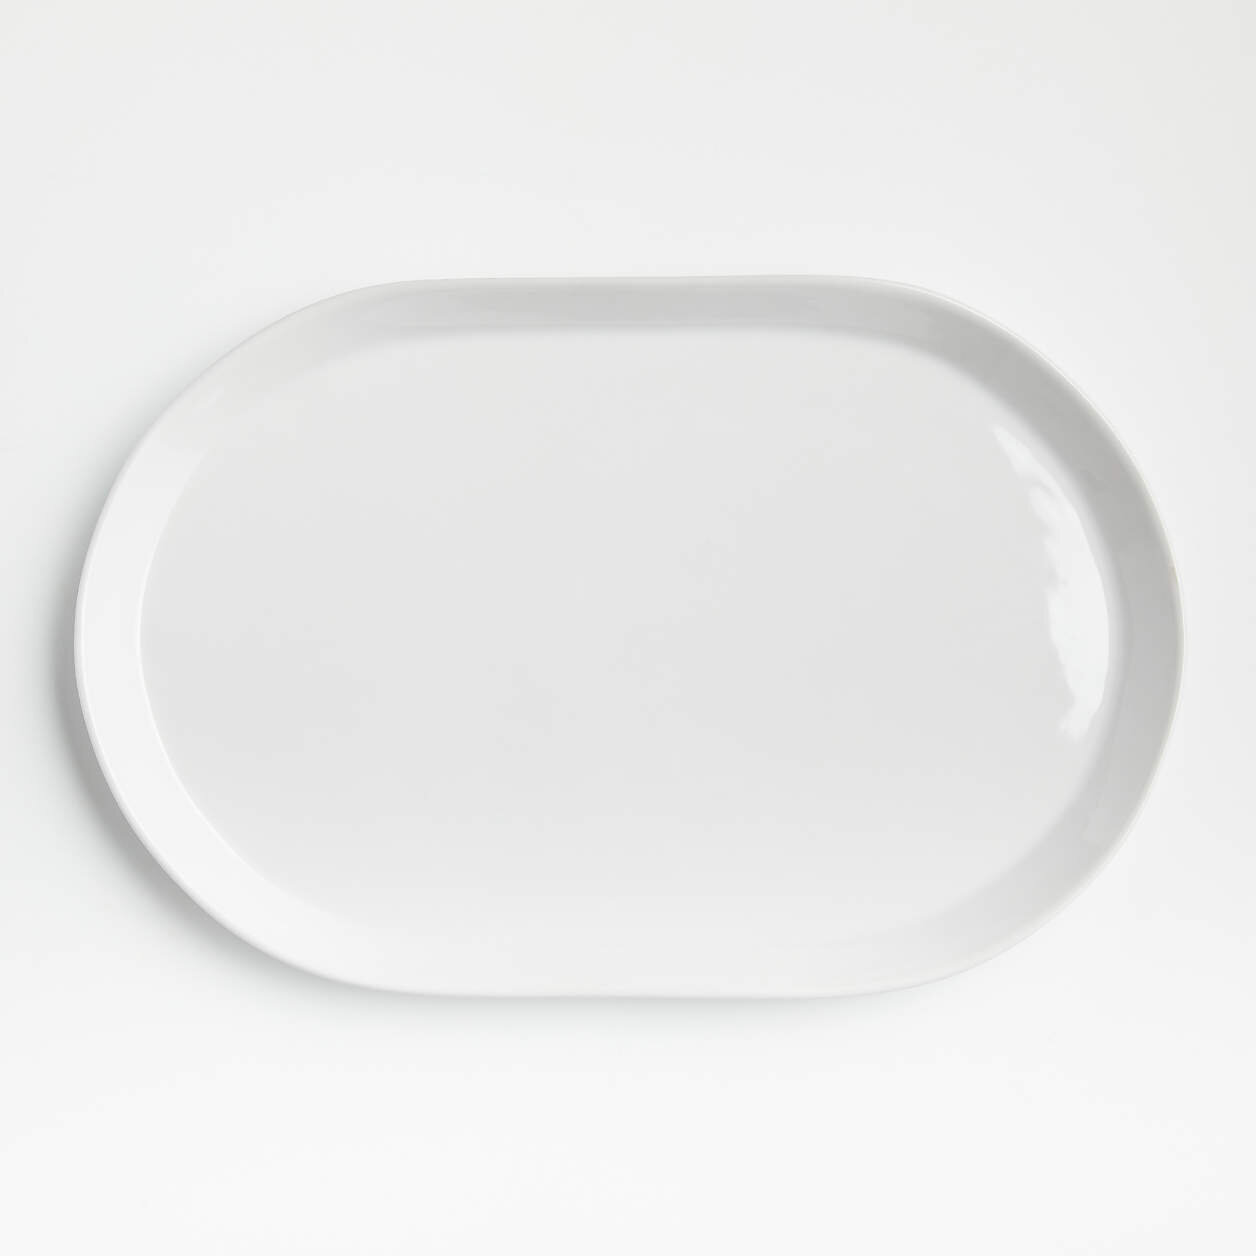 Verge 15.25" Oval Serving Platter (EXCLUSIVE)